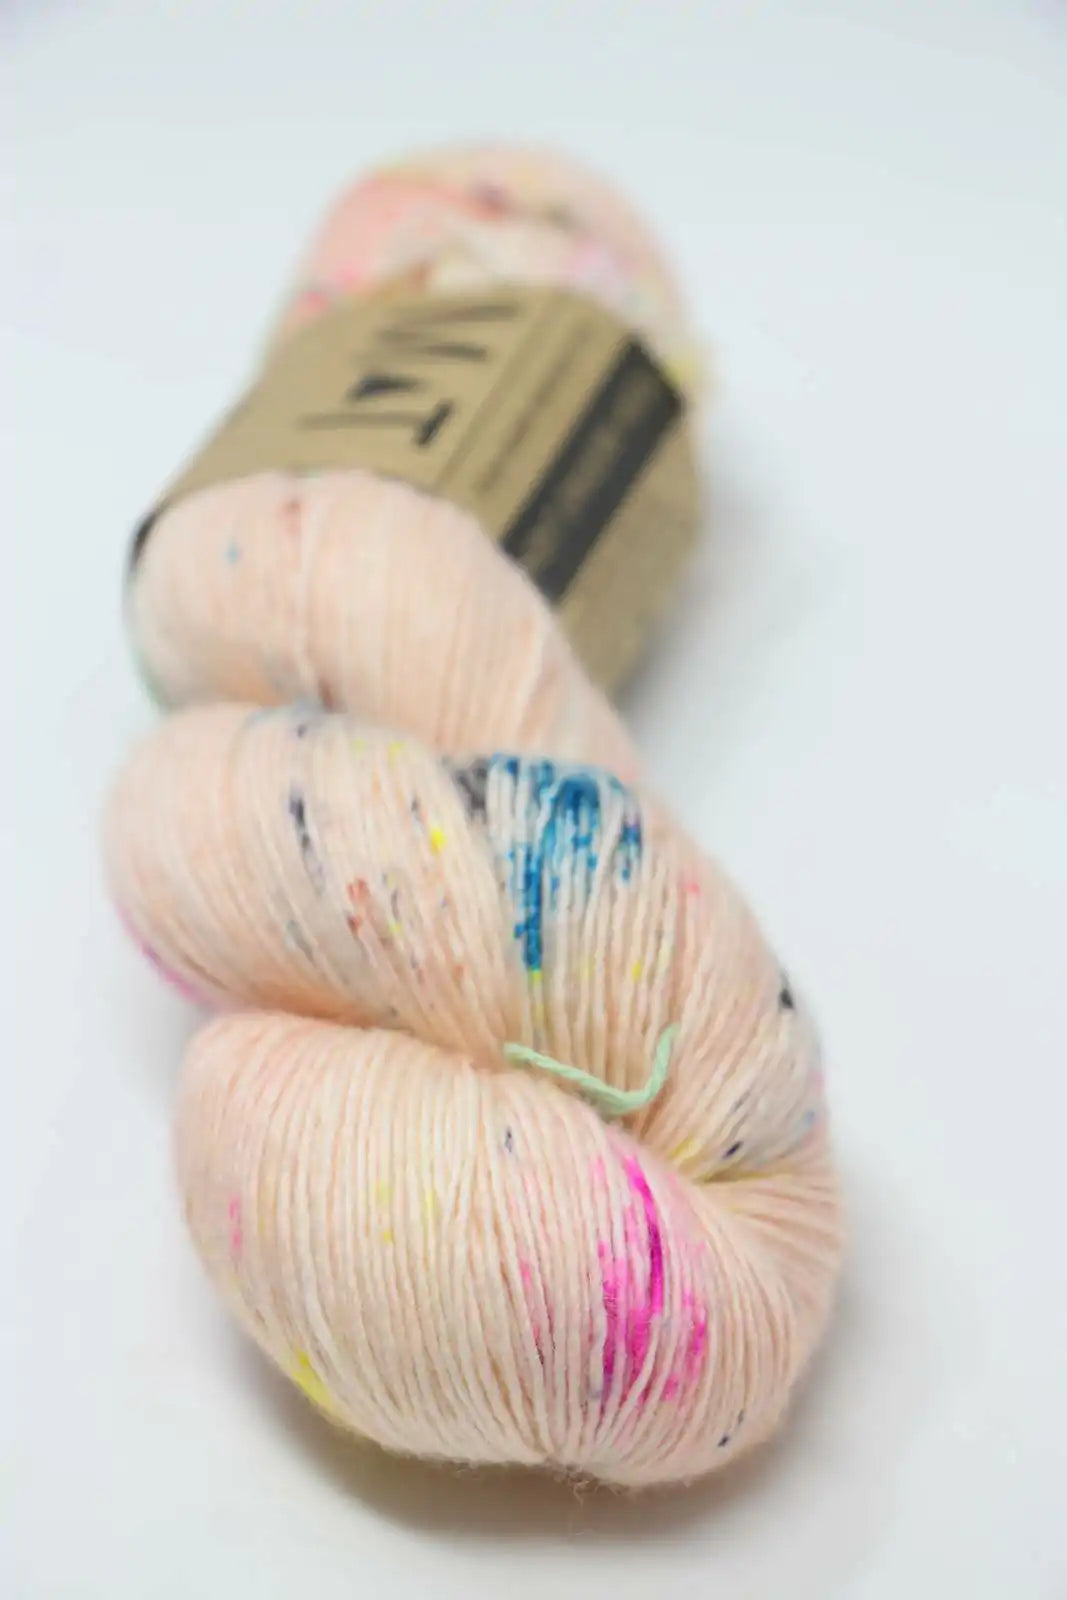 Tosh Merino Light - Multicolor and Speckled Yarns - Lamplight